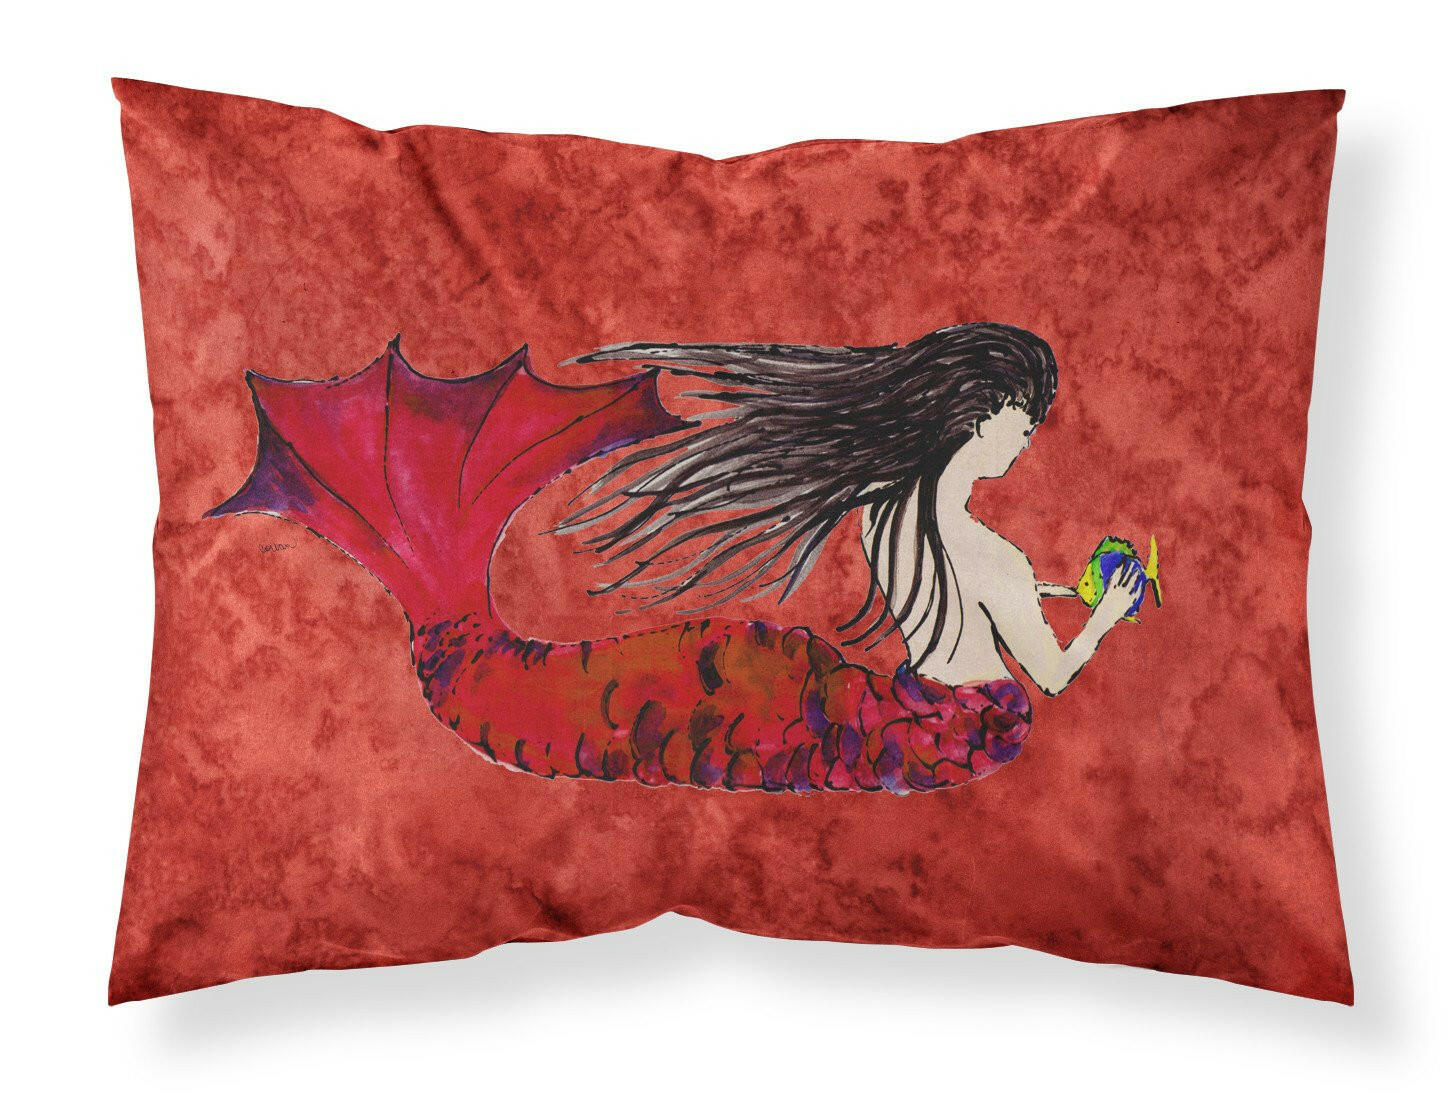 Black Haired Mermaid on Red Fabric Standard Pillowcase 8726PILLOWCASE by Caroline's Treasures